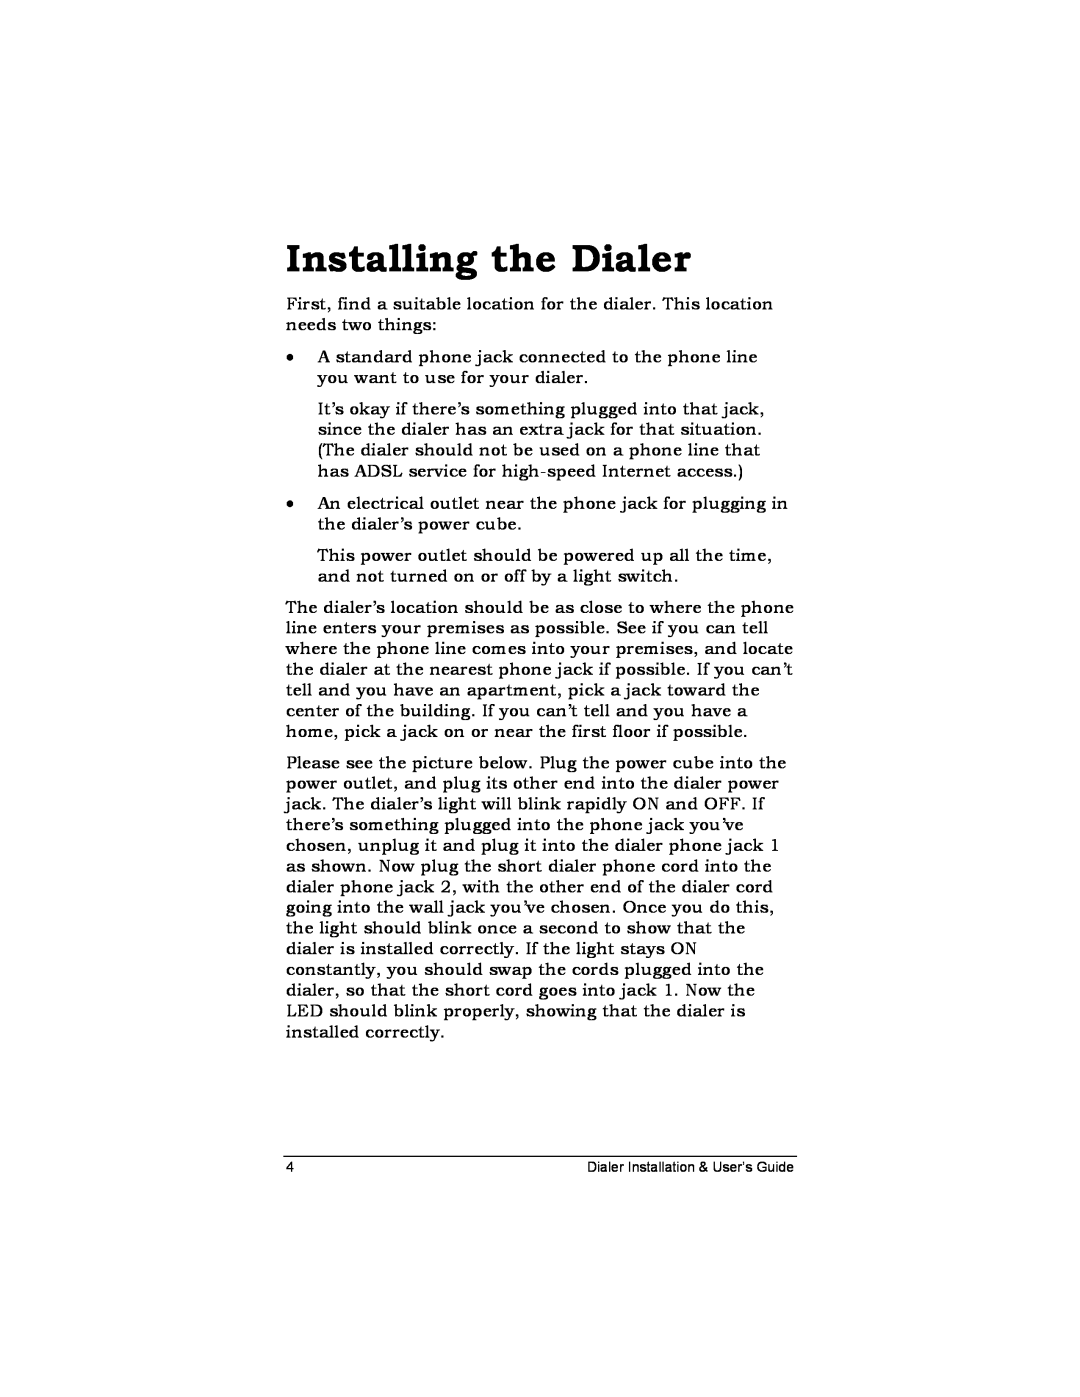 Zoom Dialer 26 manual Installing the Dialer, Dialer Installation & User’s Guide 